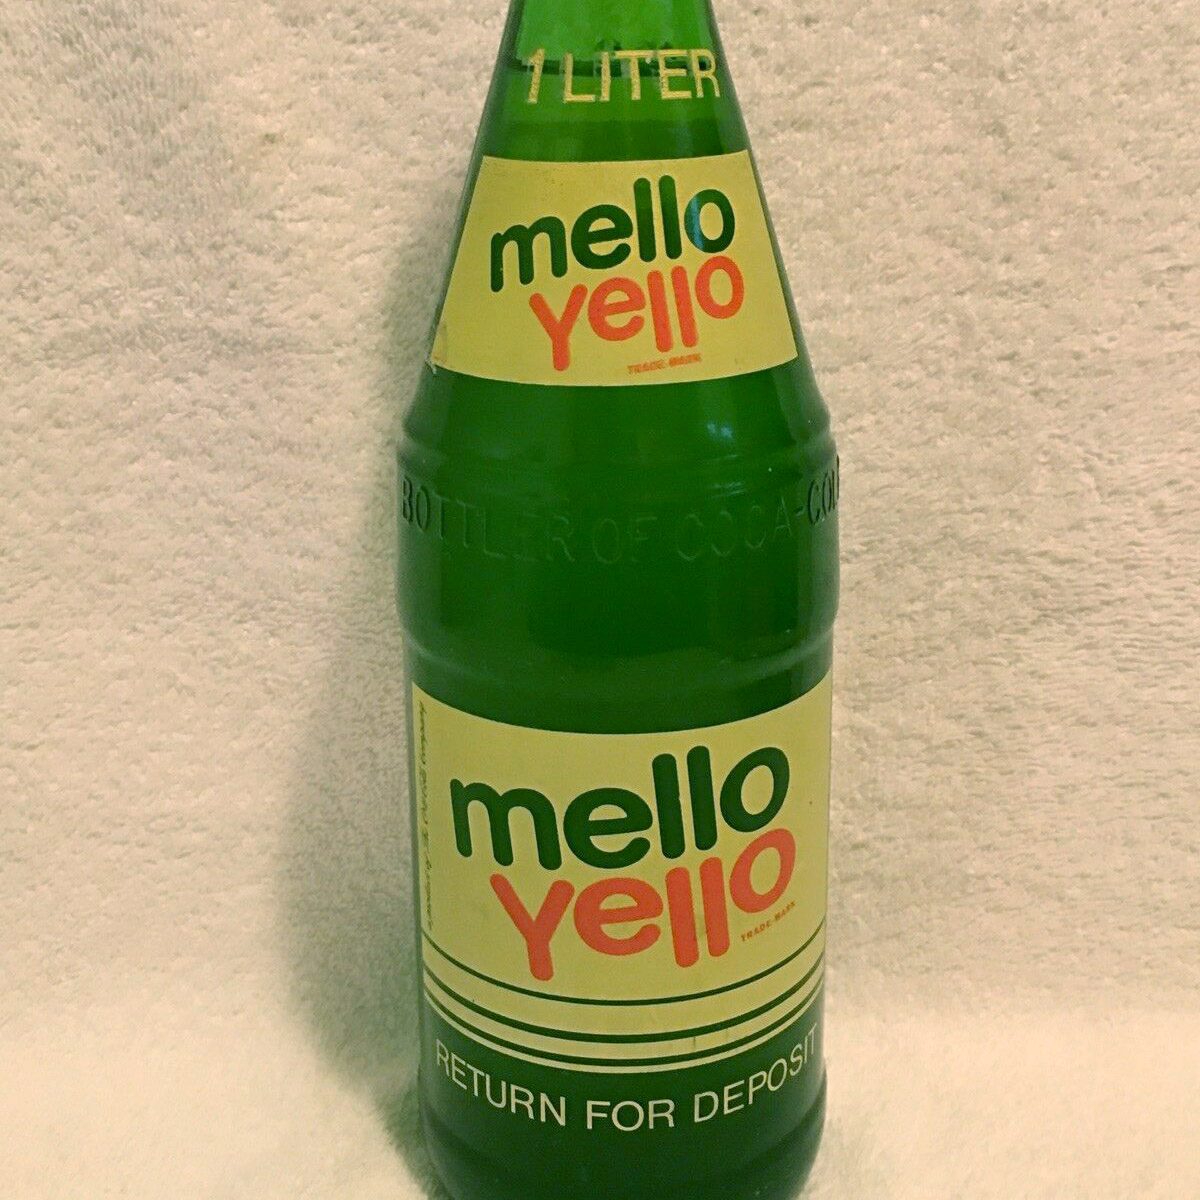 FULL 1 LITER MELLO YELLO WIDE MOUTH ACL SODA BOTTLE COCA-COLA PRODUCT